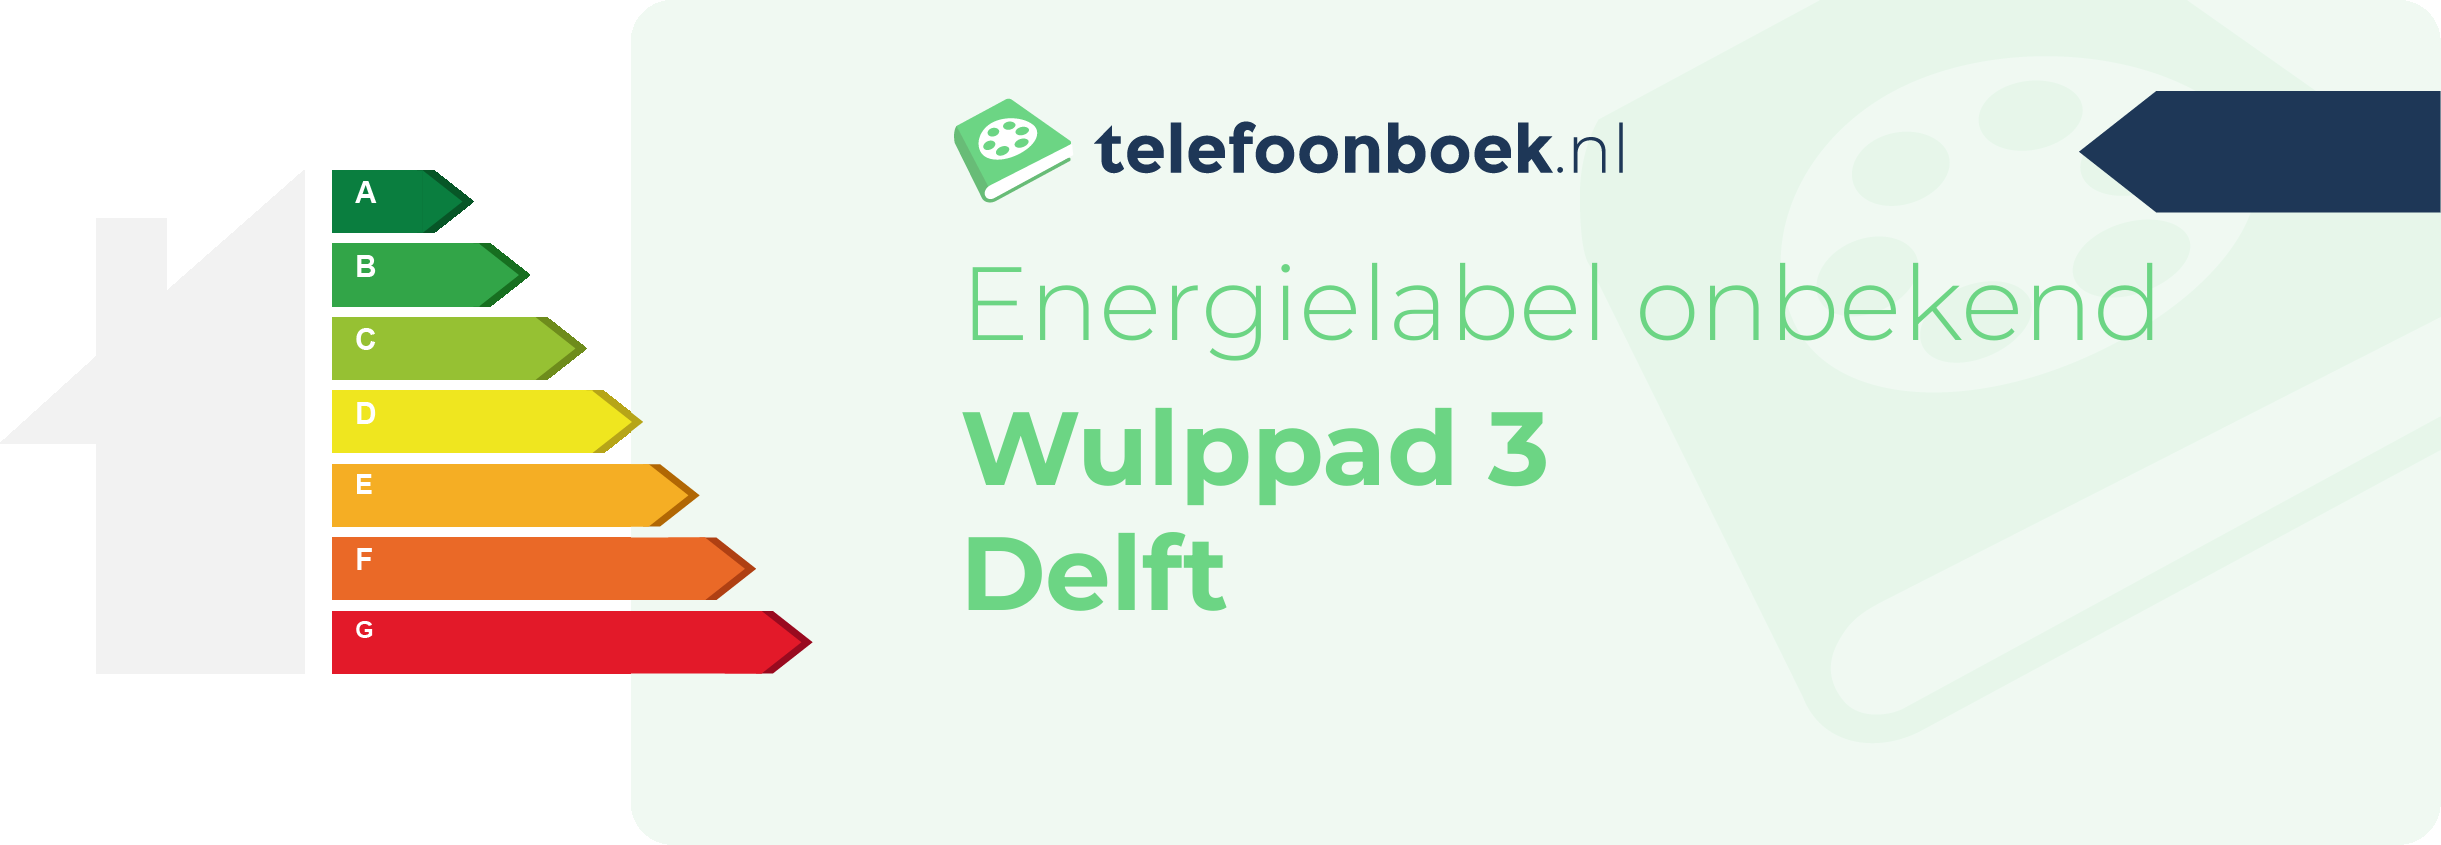 Energielabel Wulppad 3 Delft